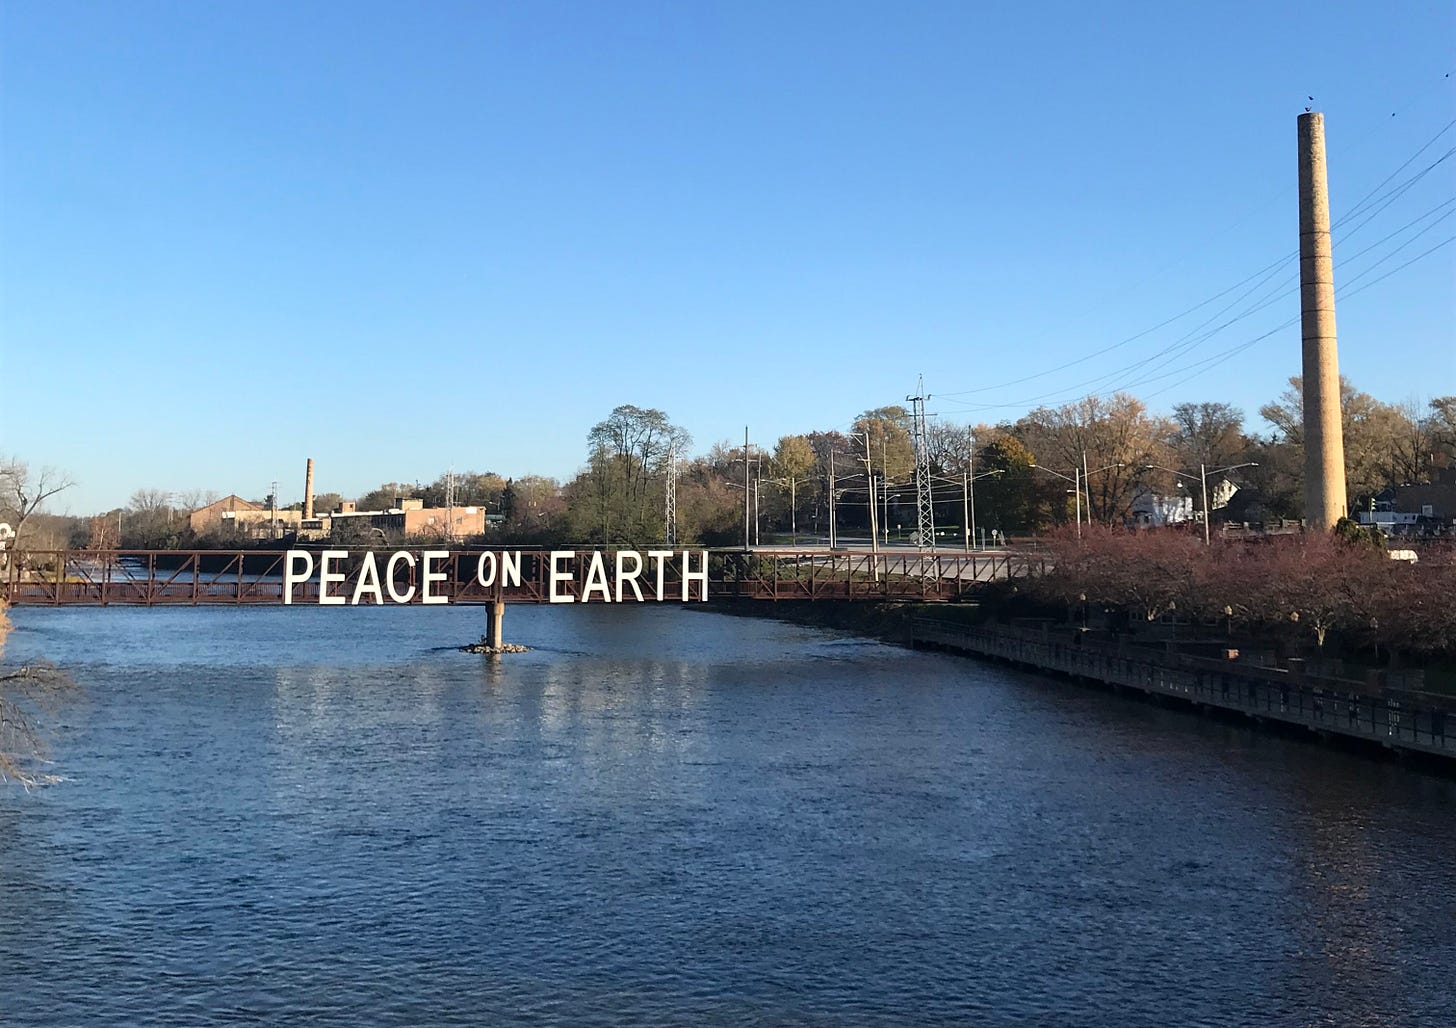 Batavia's Peace on Earth sign visible on a pedestrian bridge over the Fox River.